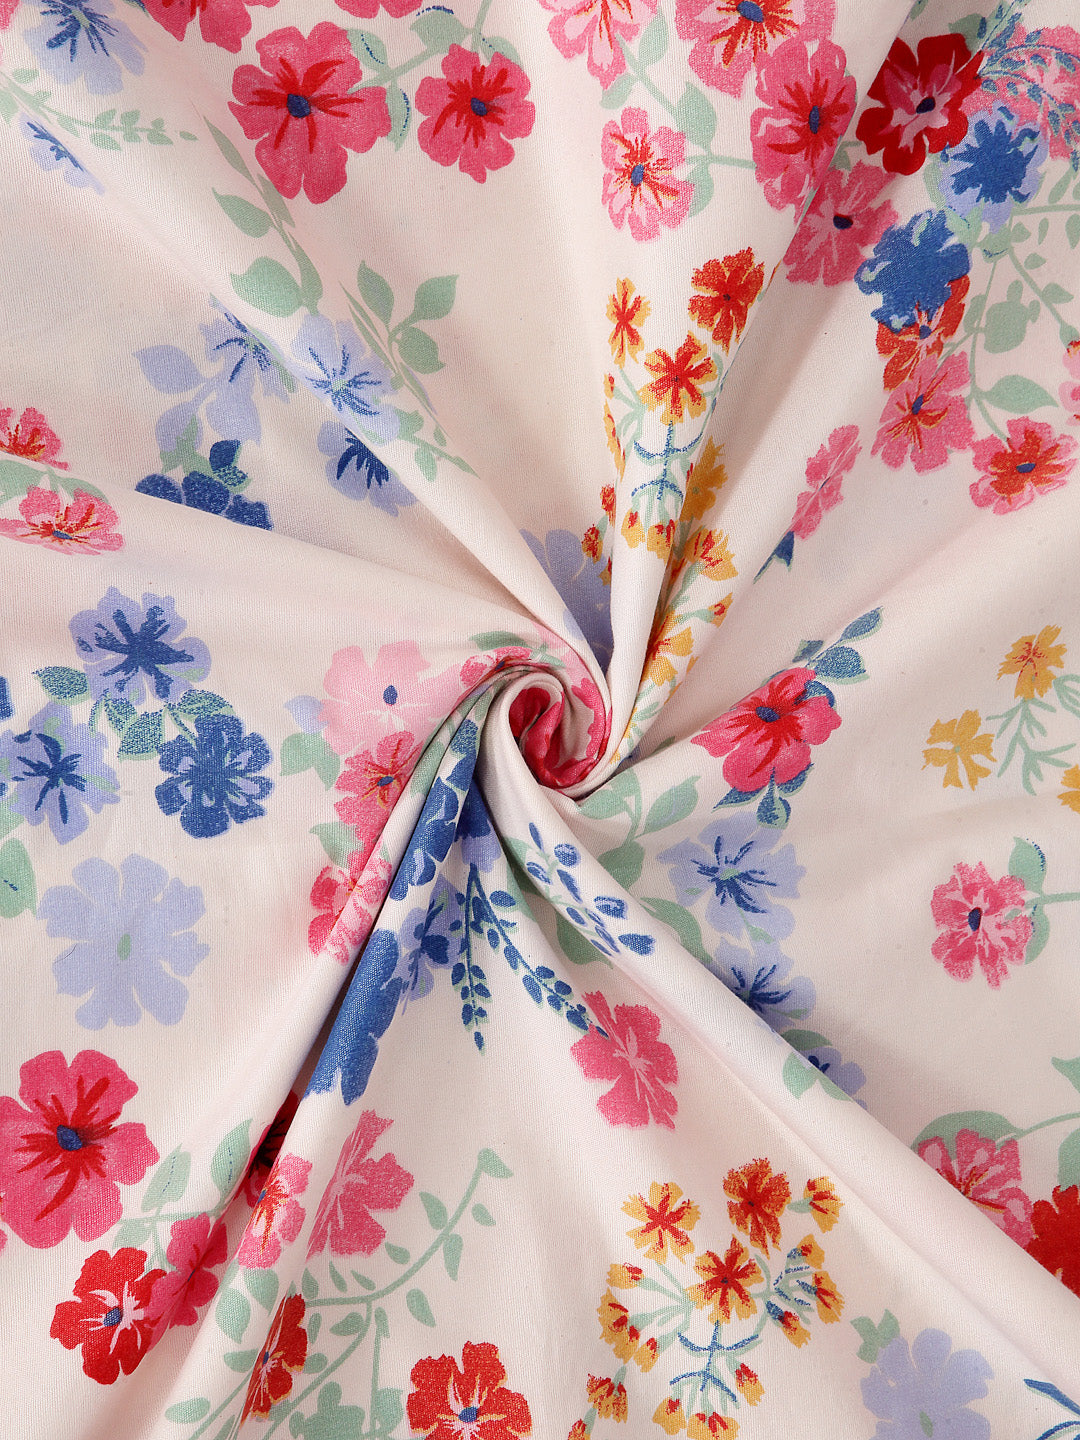 Arrabi Pink Floral TC Cotton Blend Single Size Bedsheet with 1 Pillow Cover (215 x 150 cm)